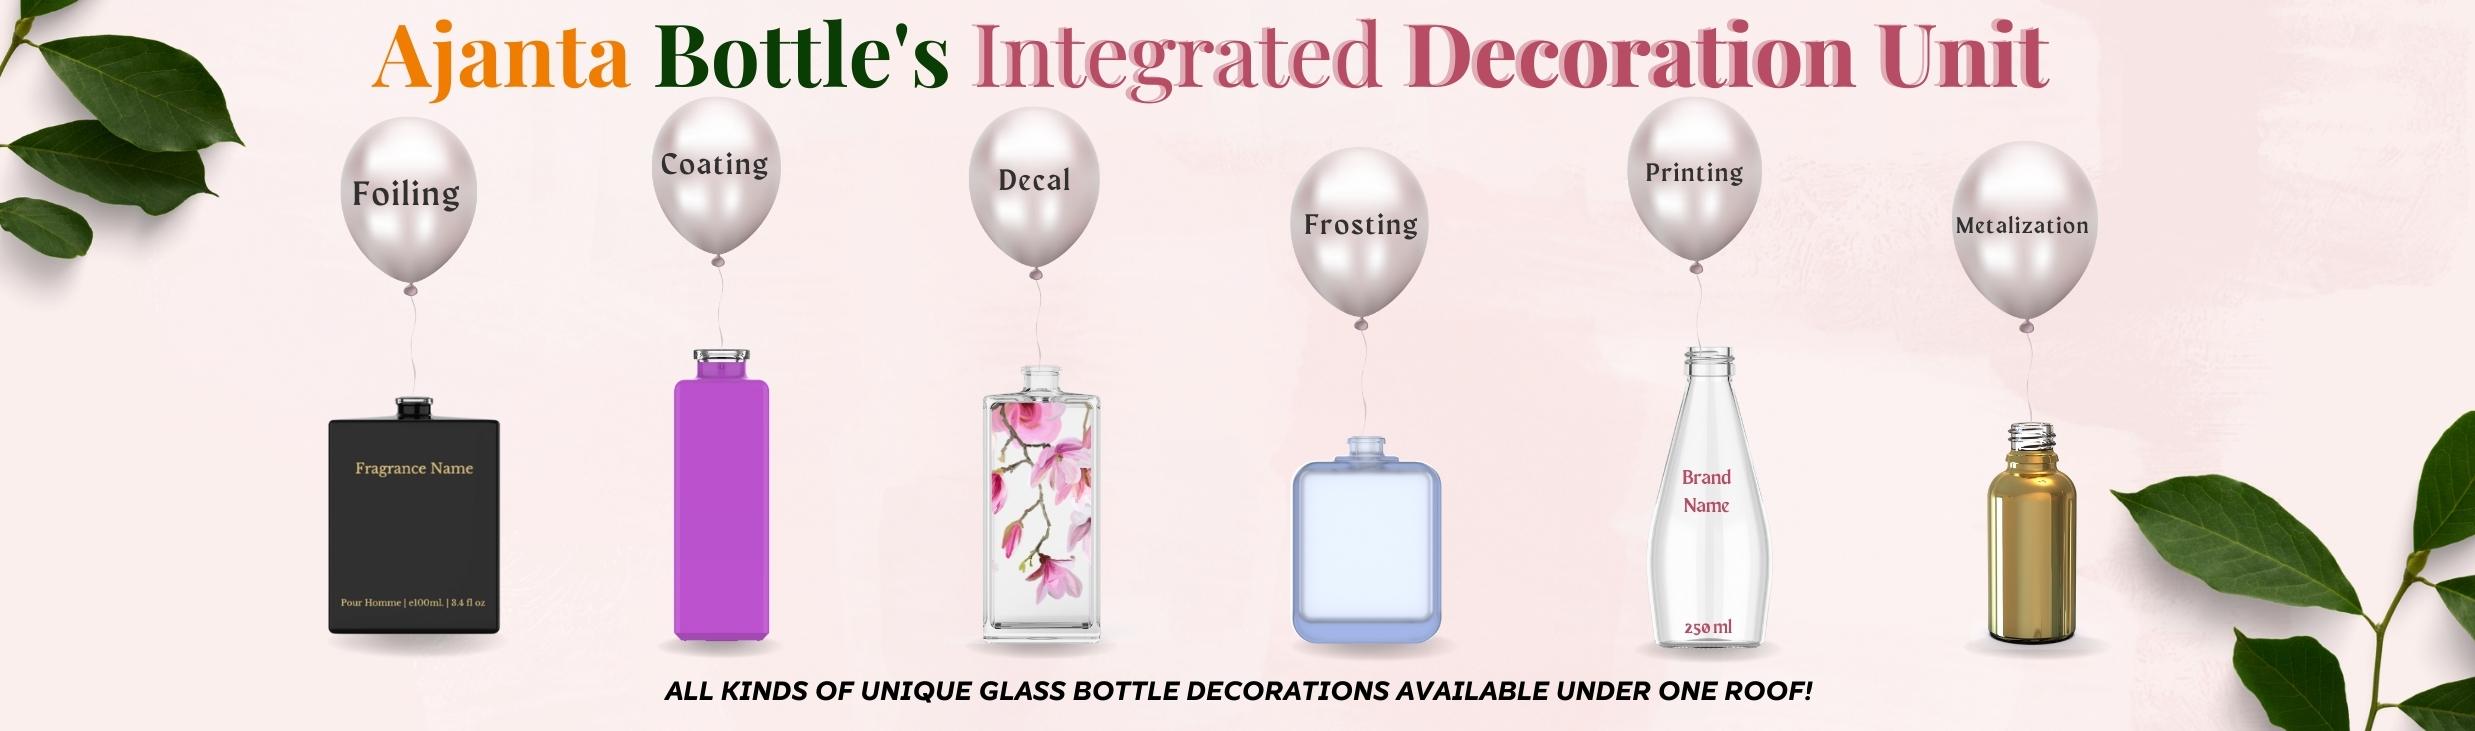 Glass Bottle decoration ideas, Packaging Design Ideas